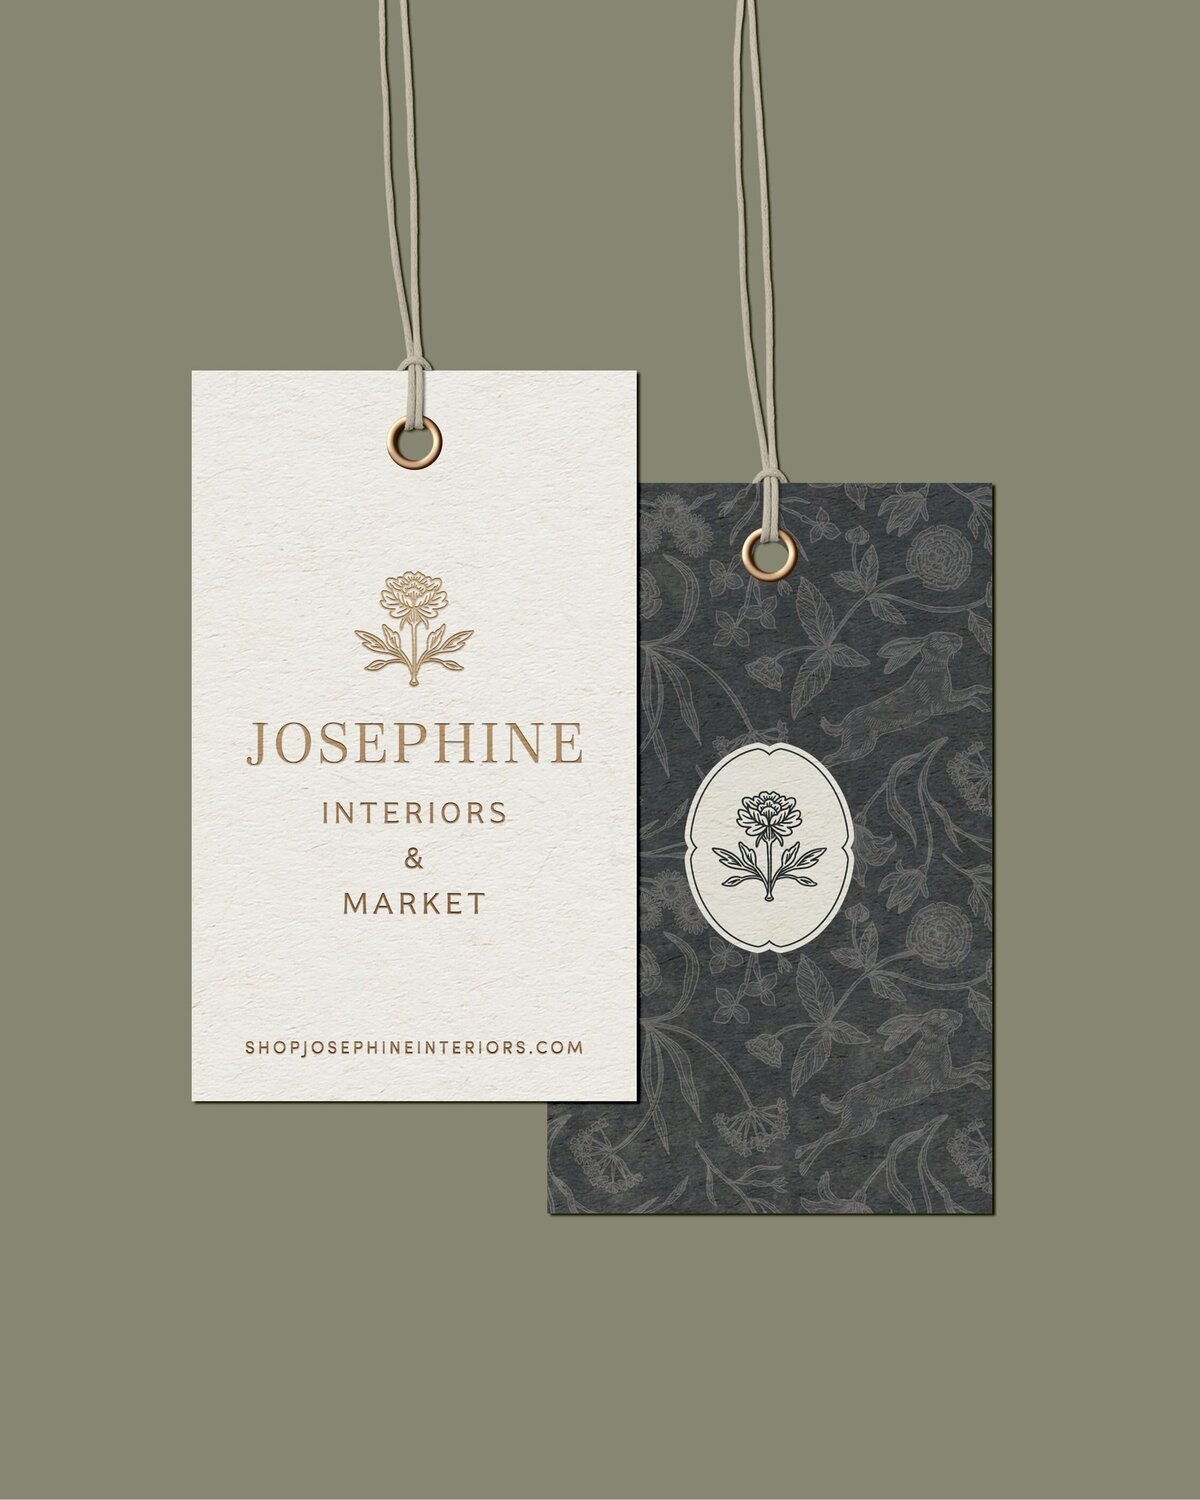 JosephineInteriors&Market_LaunchGraphics_Instagram